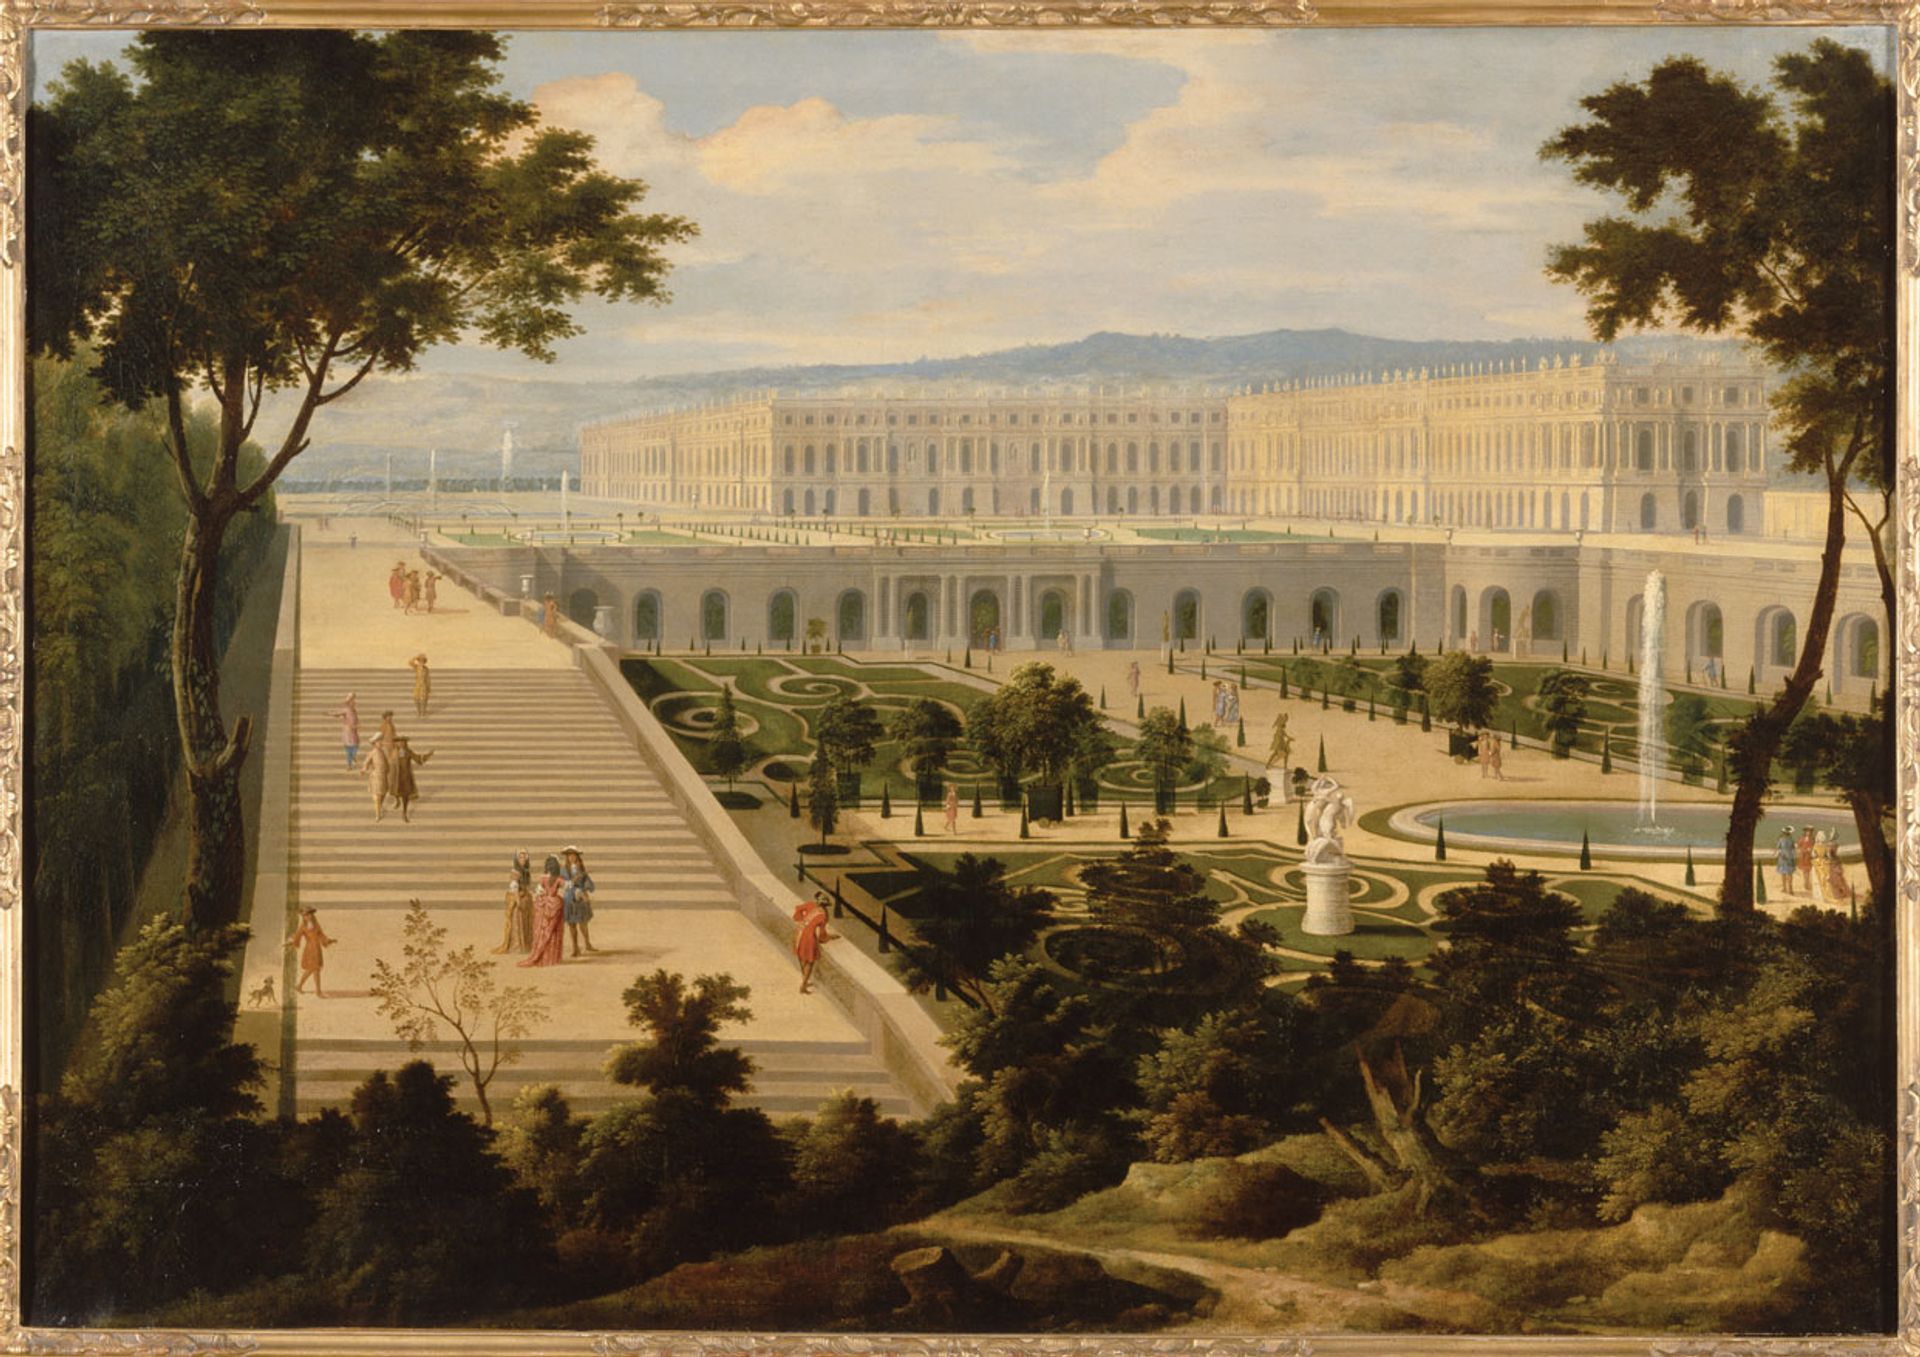 View of the Château de Versailles and the Orangerie (around 1695), attributed to Etienne Allegrain © Château de Versailles, Dist. RMN © Jean-Marc Manaï


